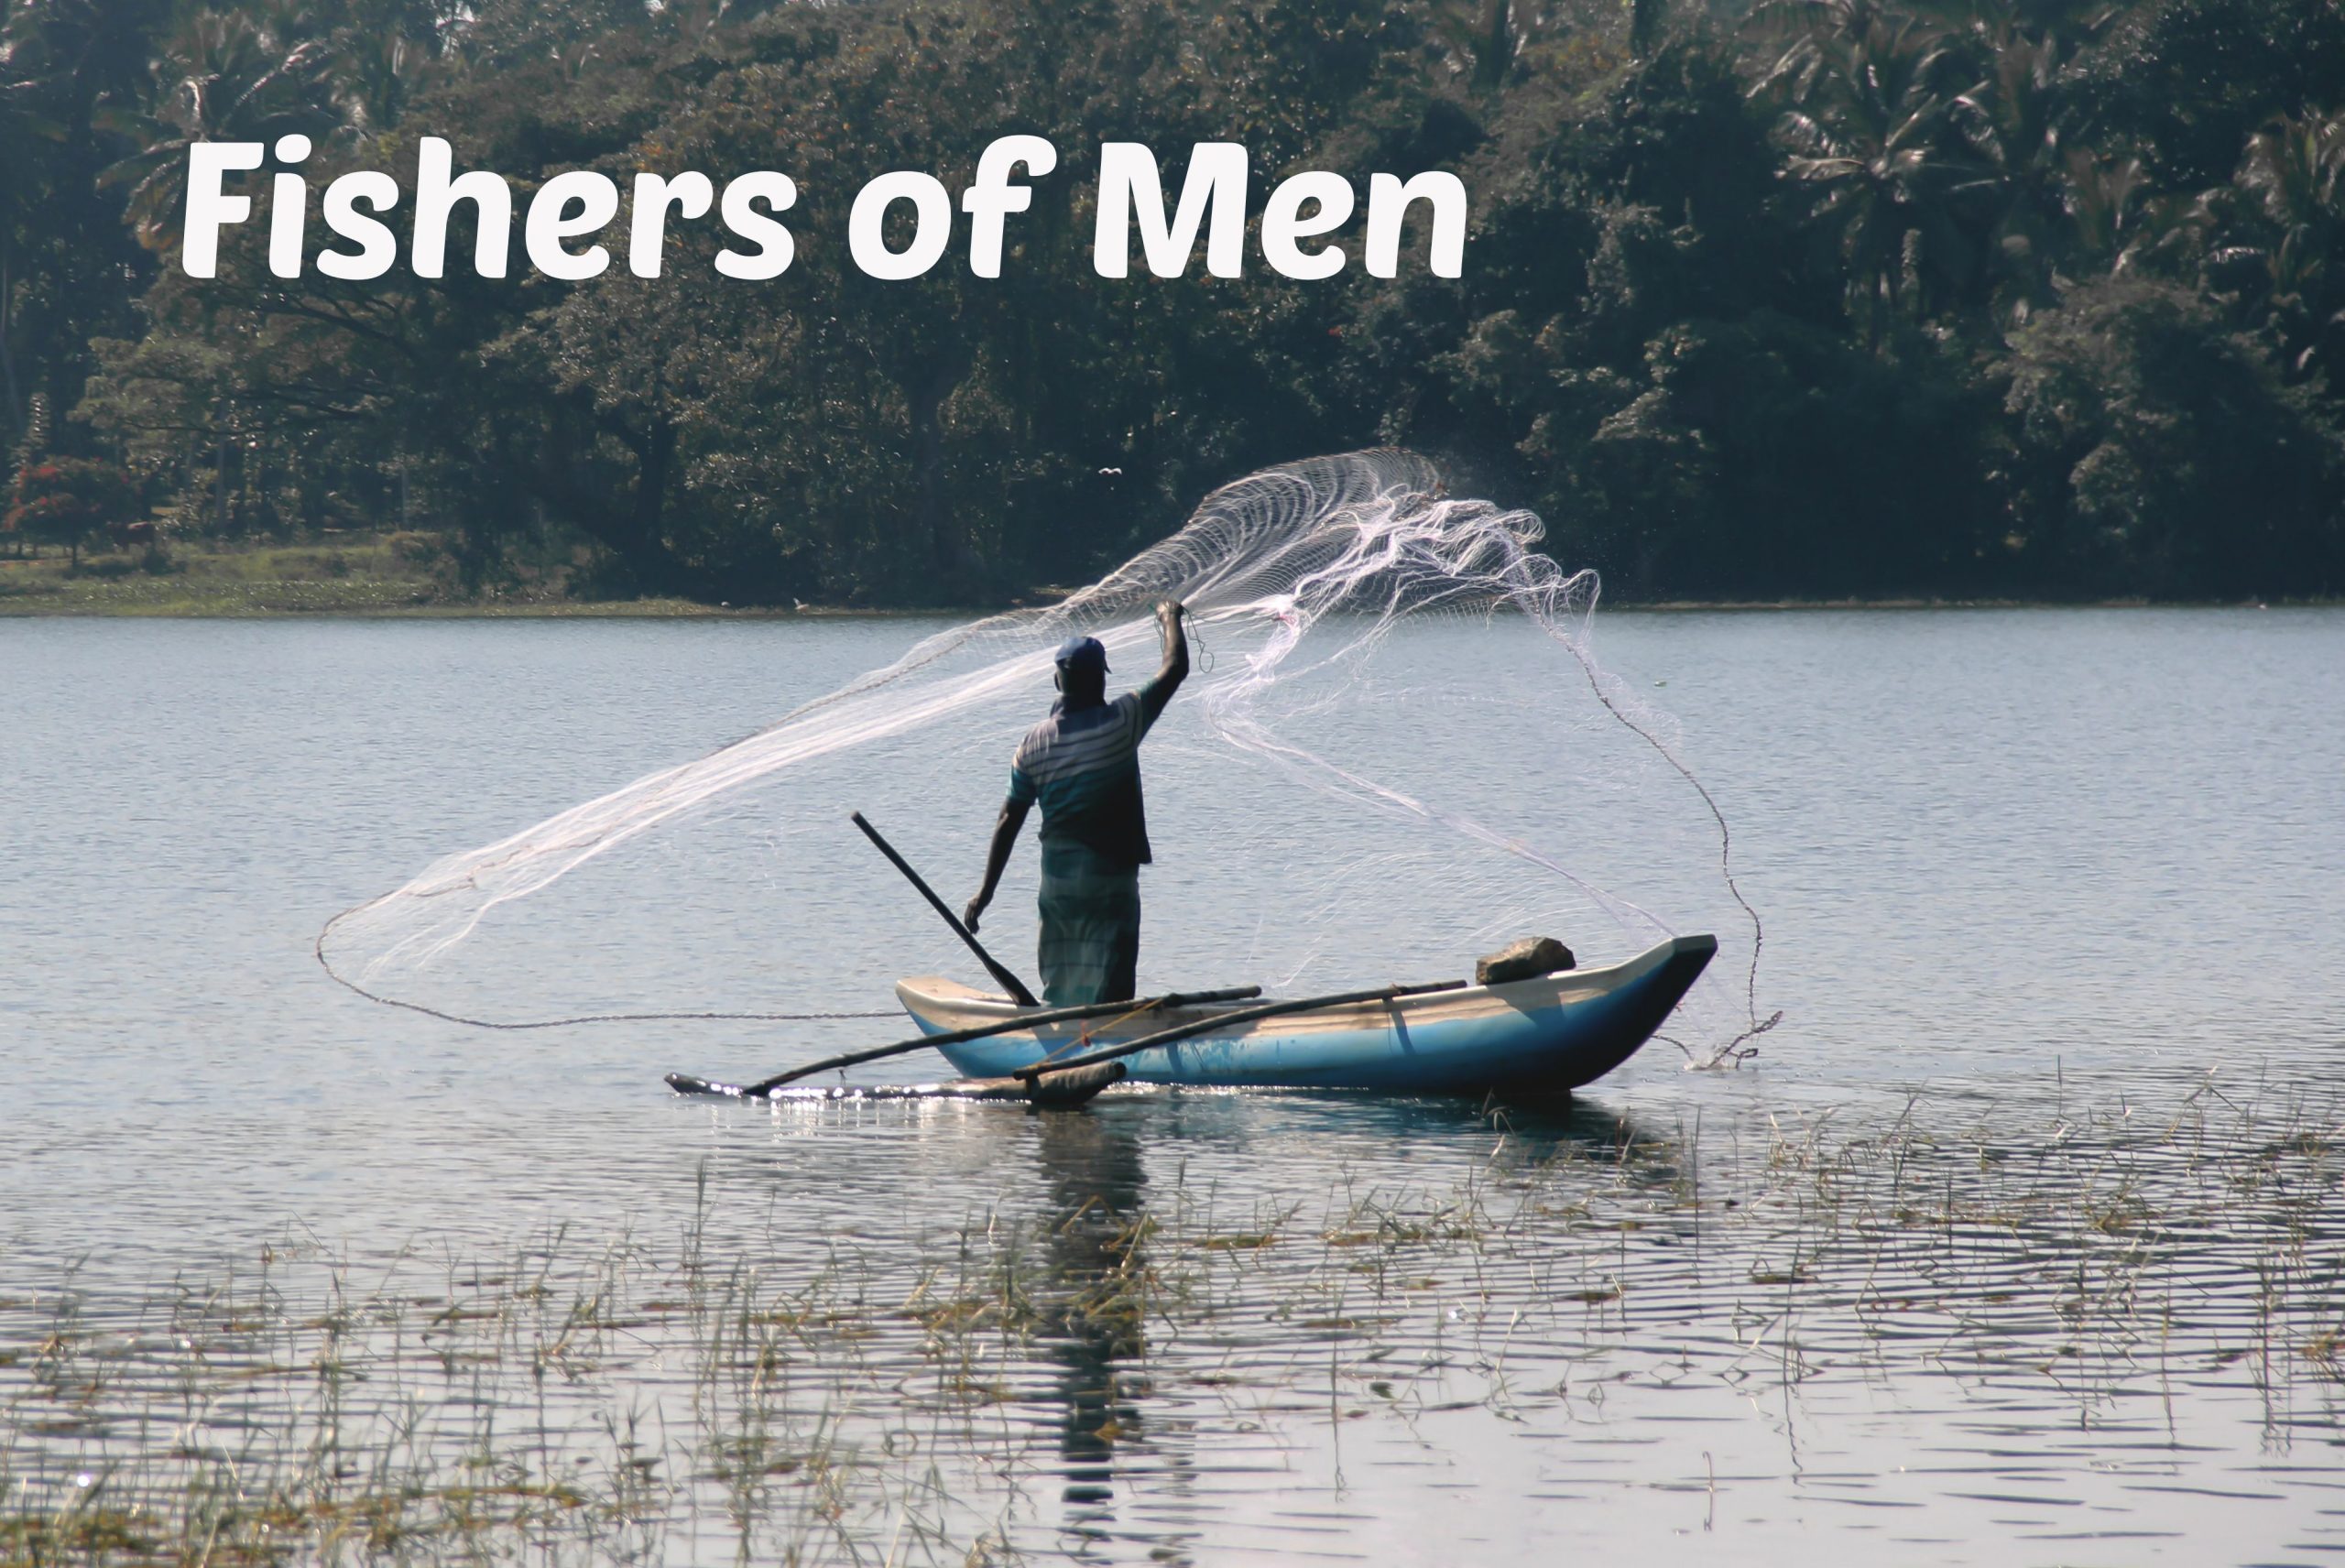 Fishers of Men - fishing net